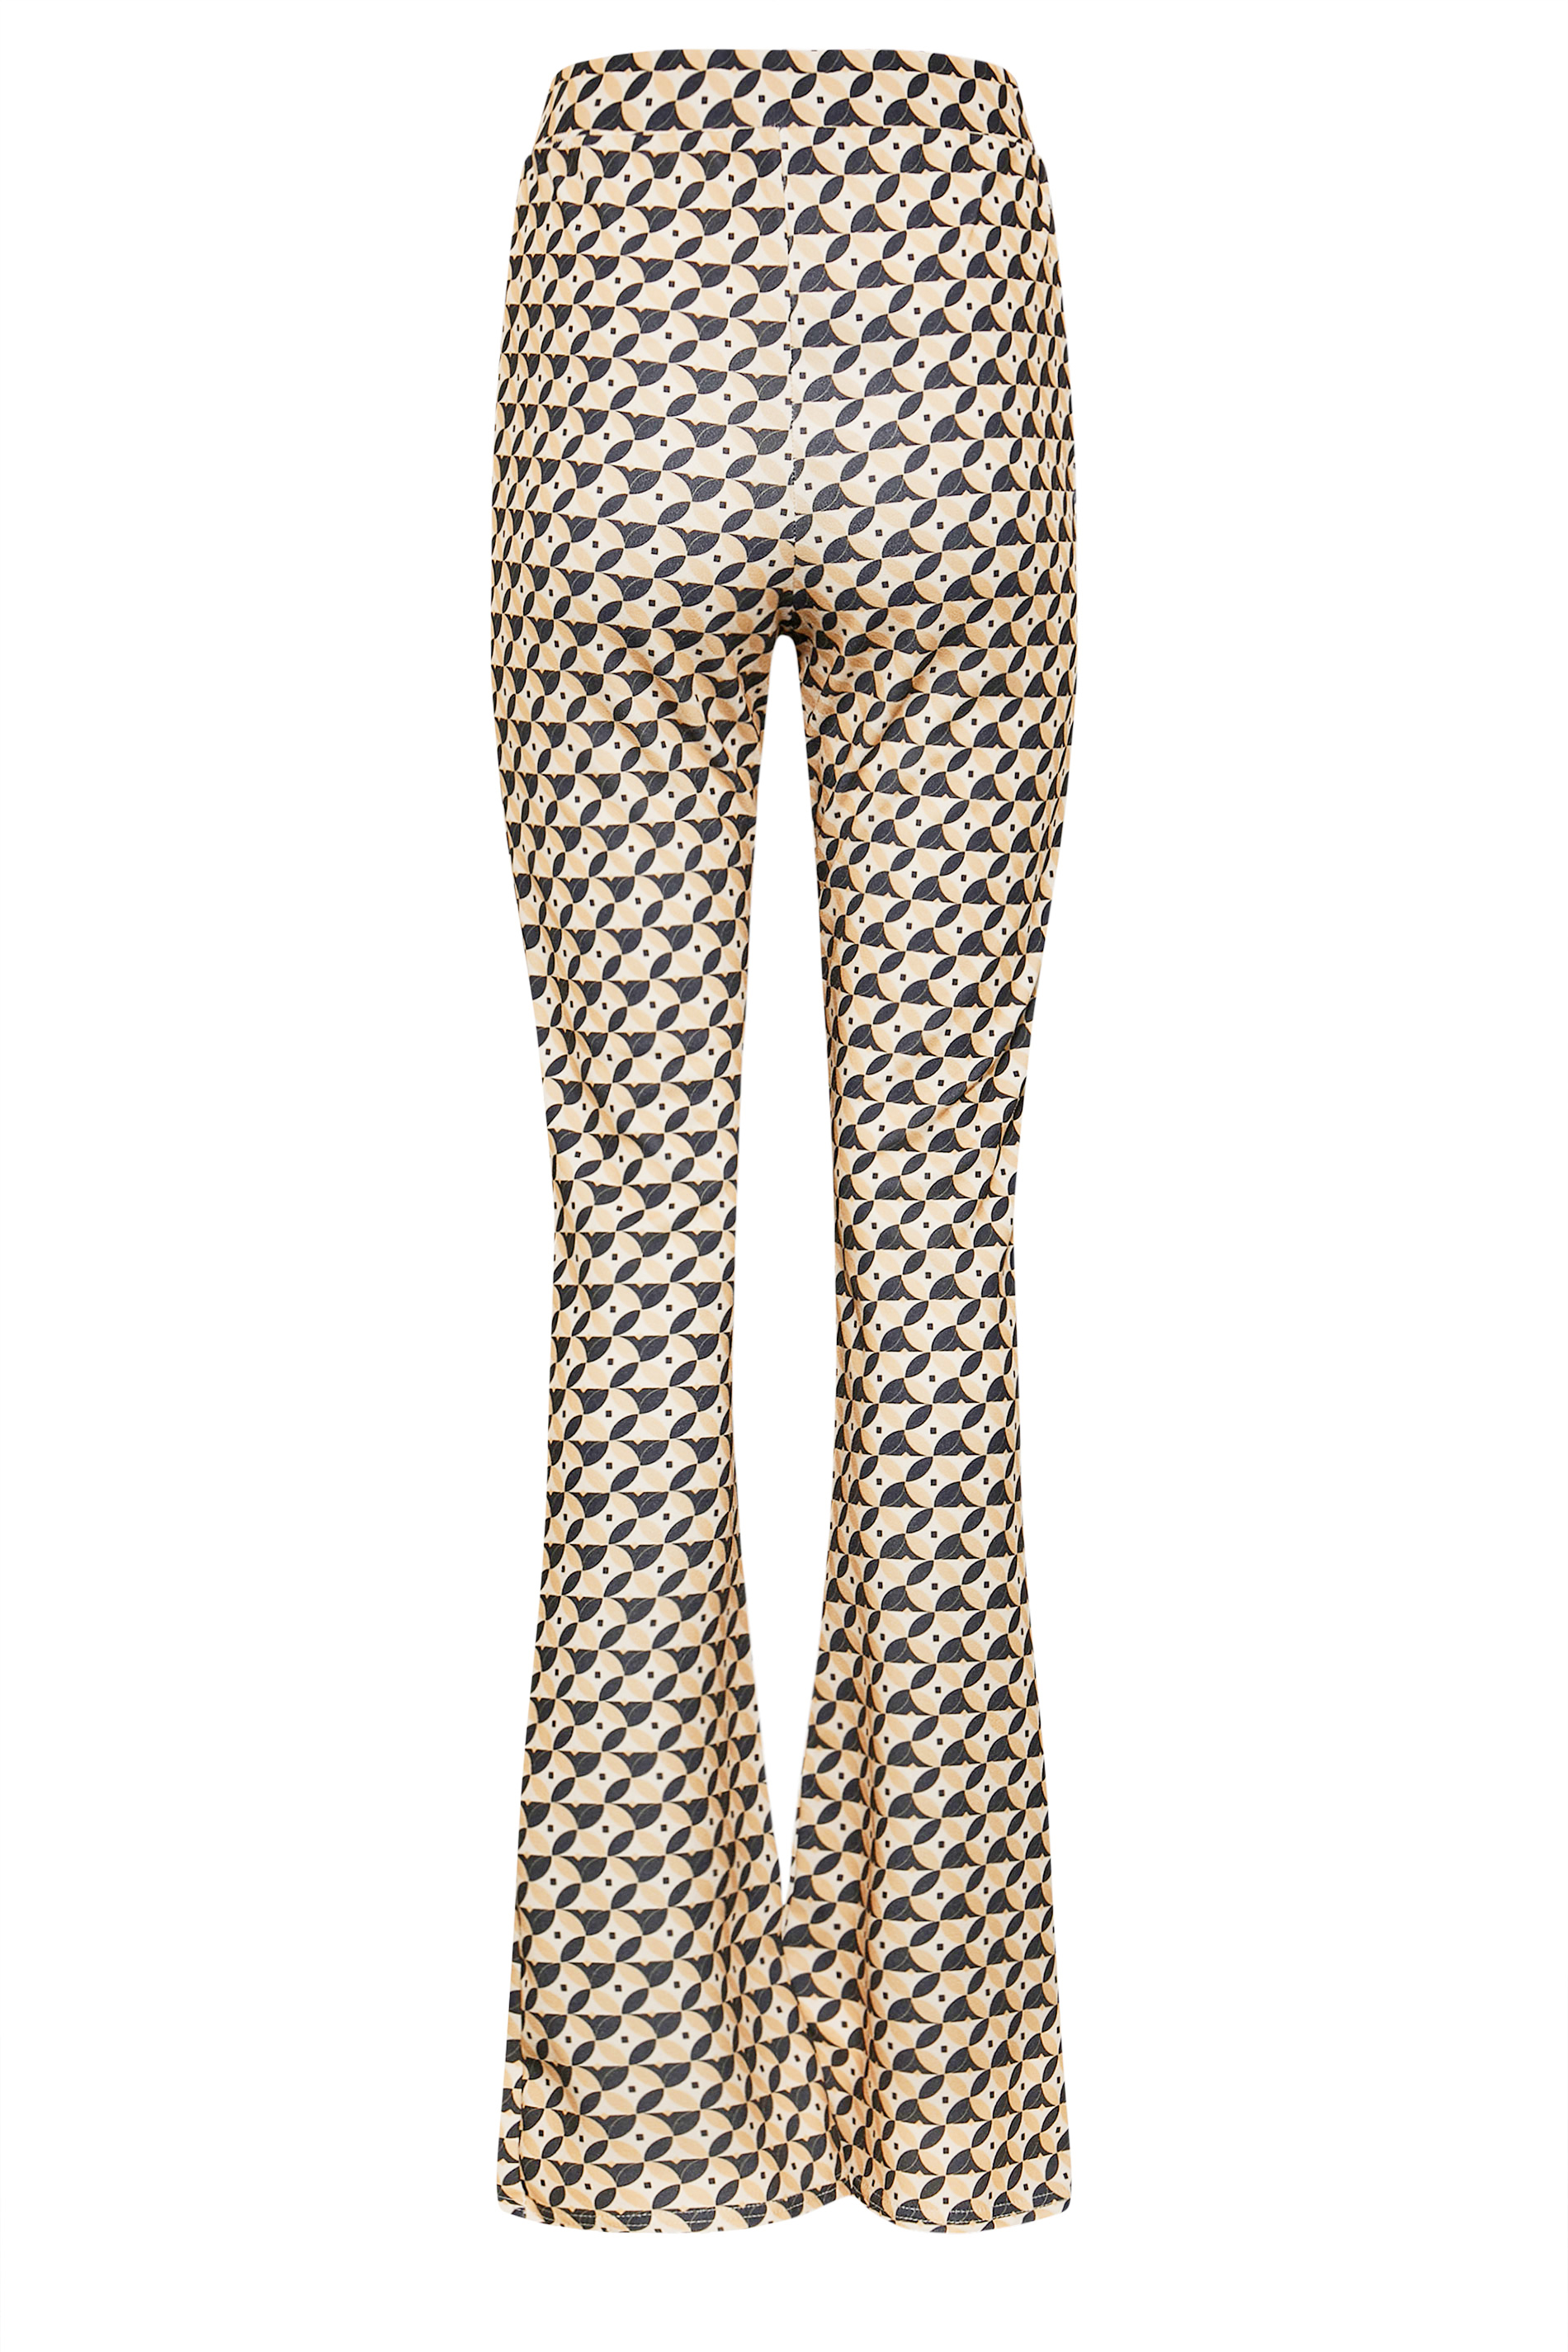 LTS Tall Women's Beige Brown Geometric Print Scuba Trousers | Long Tall Sally 3